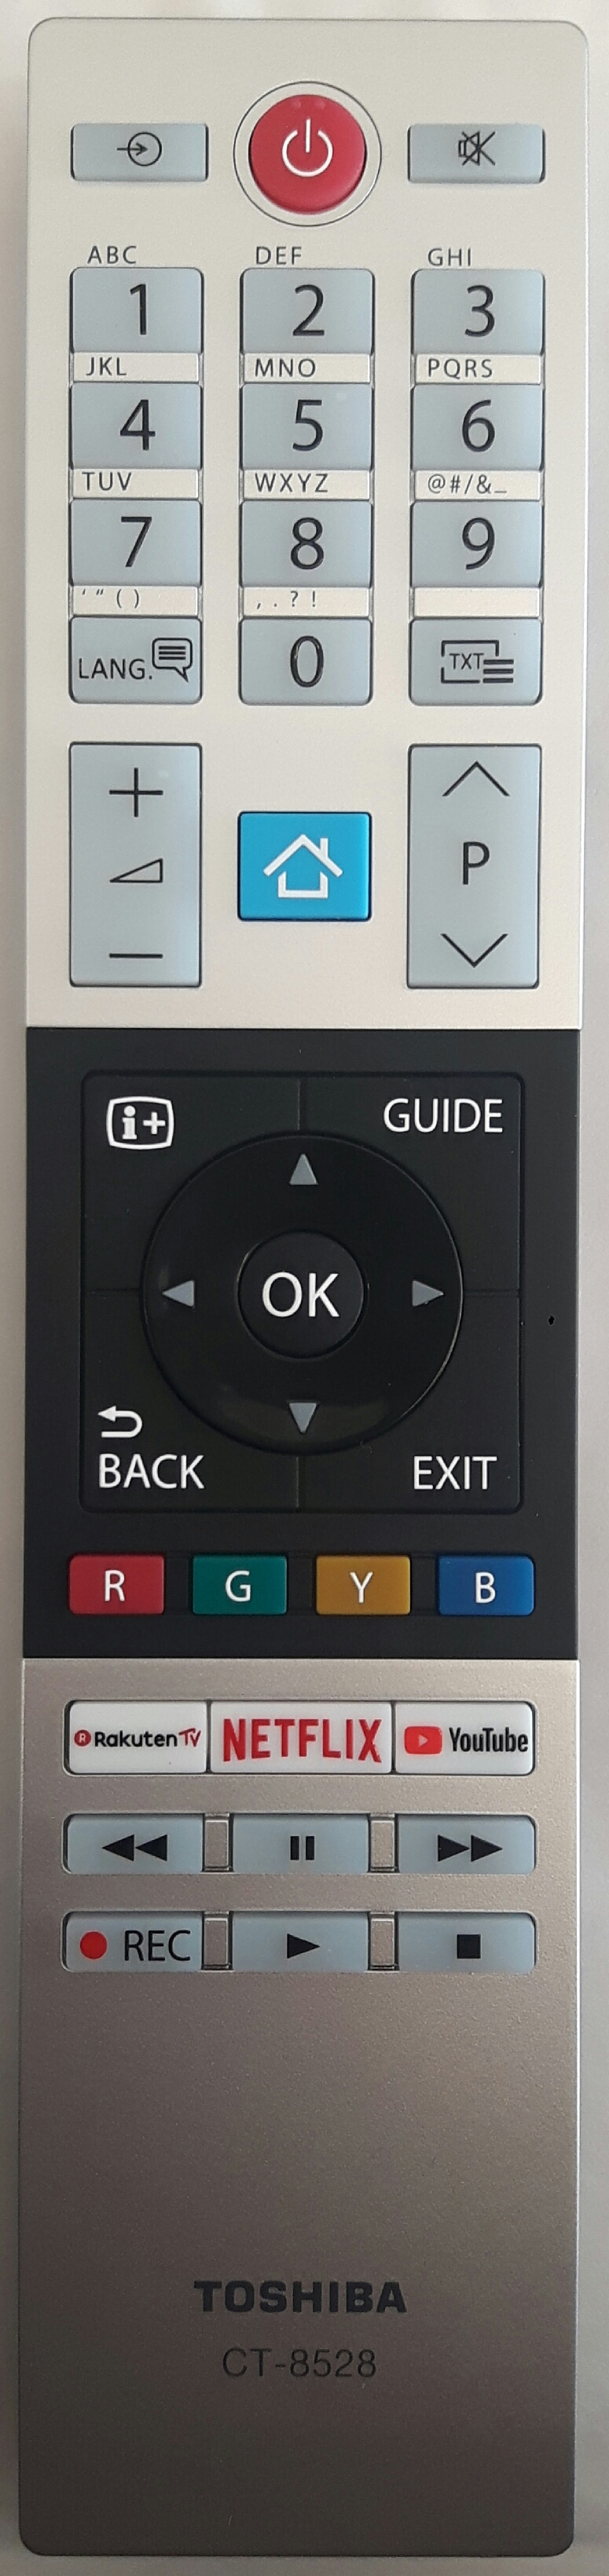 TOSHIBA 55T6863DG Remote Control Original